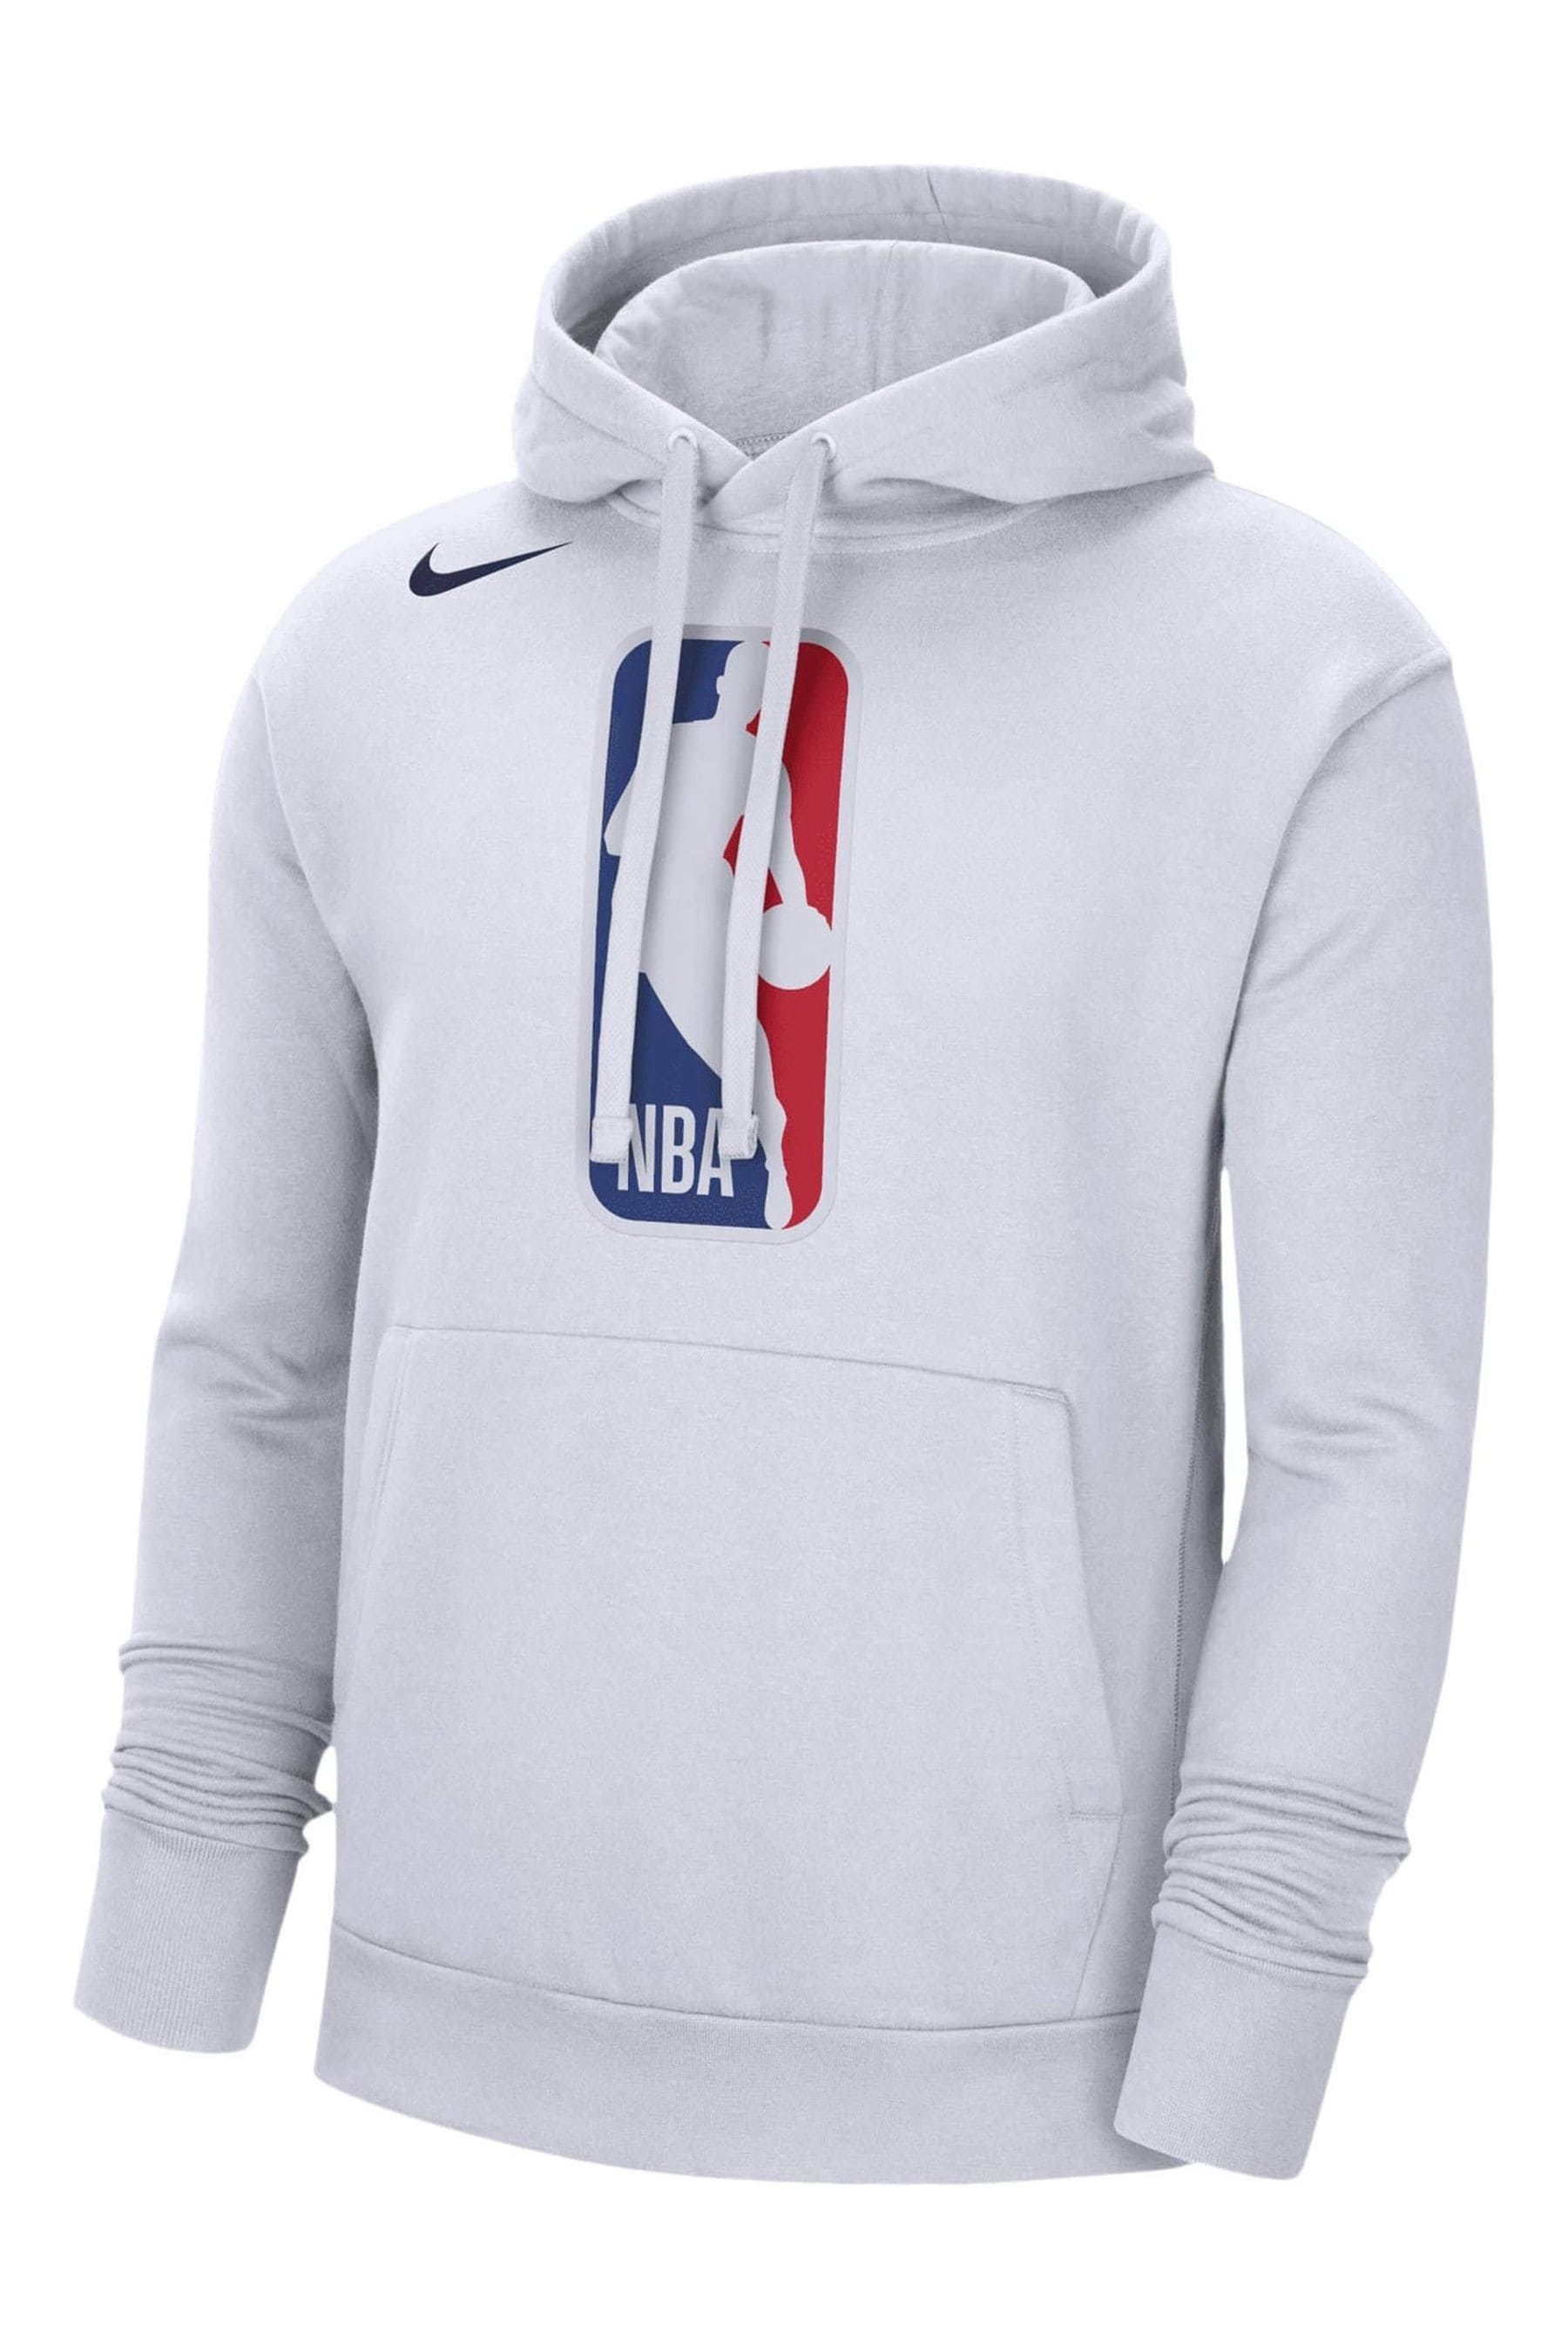 Buy Nike White Fanatics NBA Nike Team 31 Logoman Hoodie from the Next ...